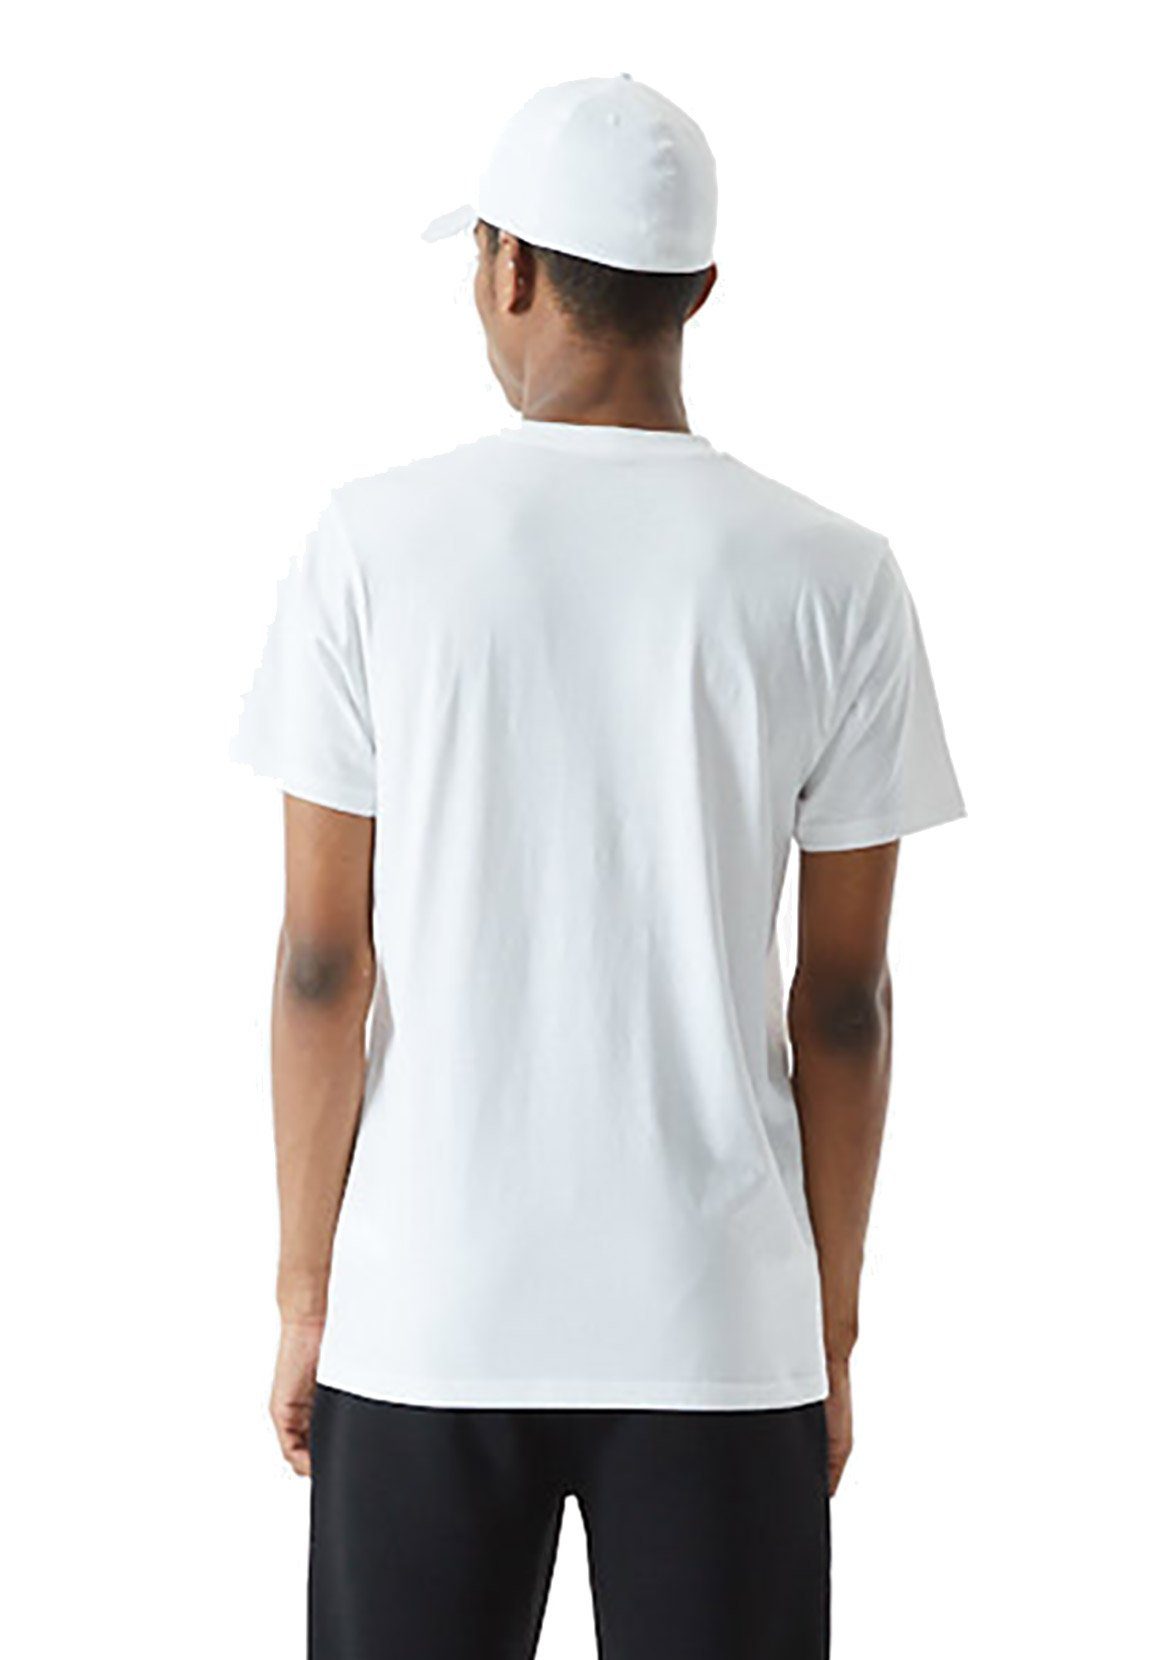 T-Shirt Team LA DODGERS Herren Era Infill MLB Logo Era T-Shirt New New Weiß